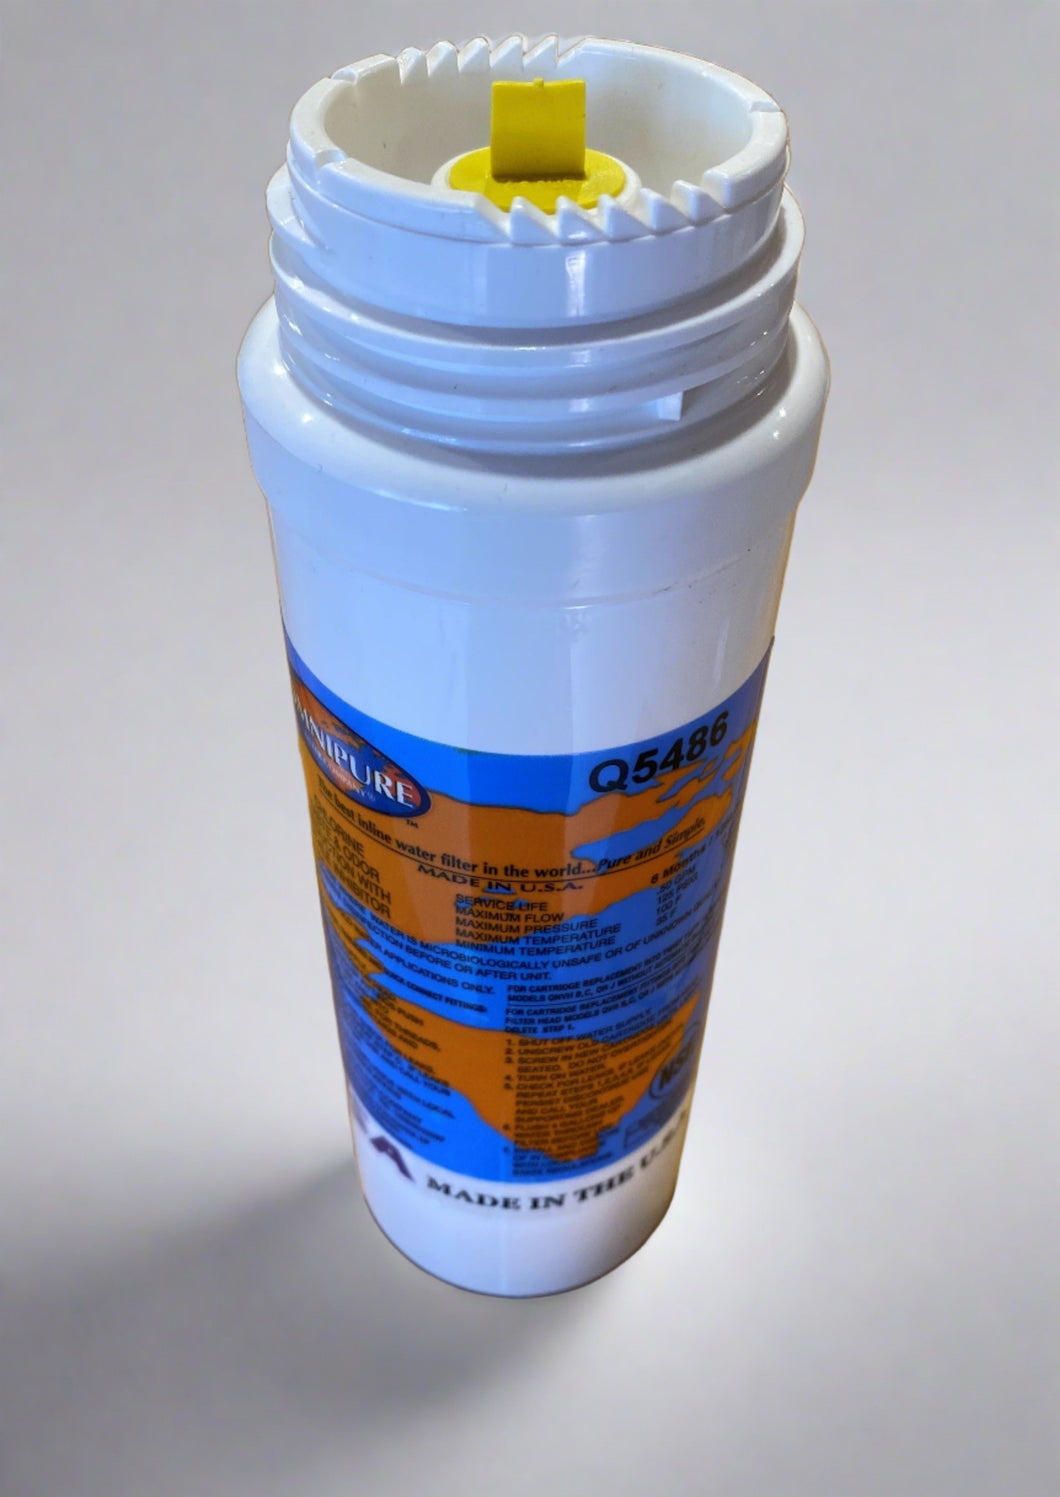 Omnipure Q5486 Q-Series Water Filter Cartridge